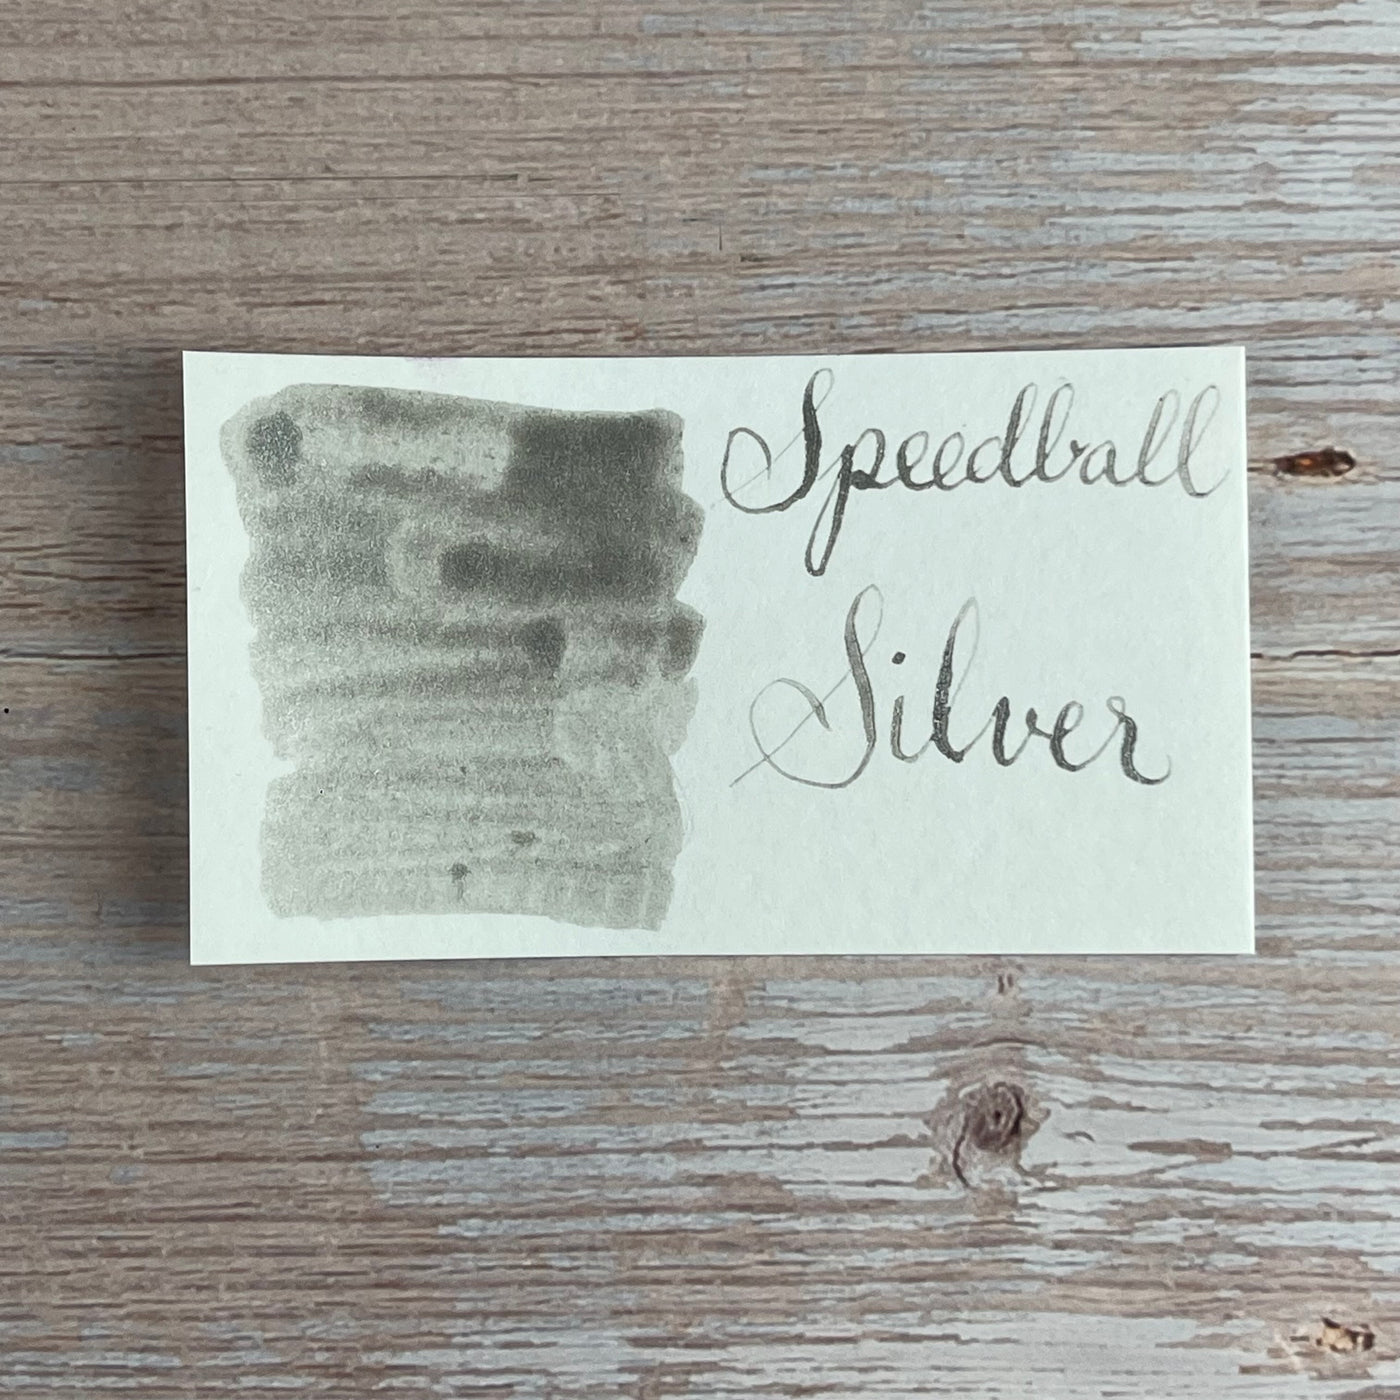 Speedball Super Pigmented Acrylic Silver - 2 oz Ink